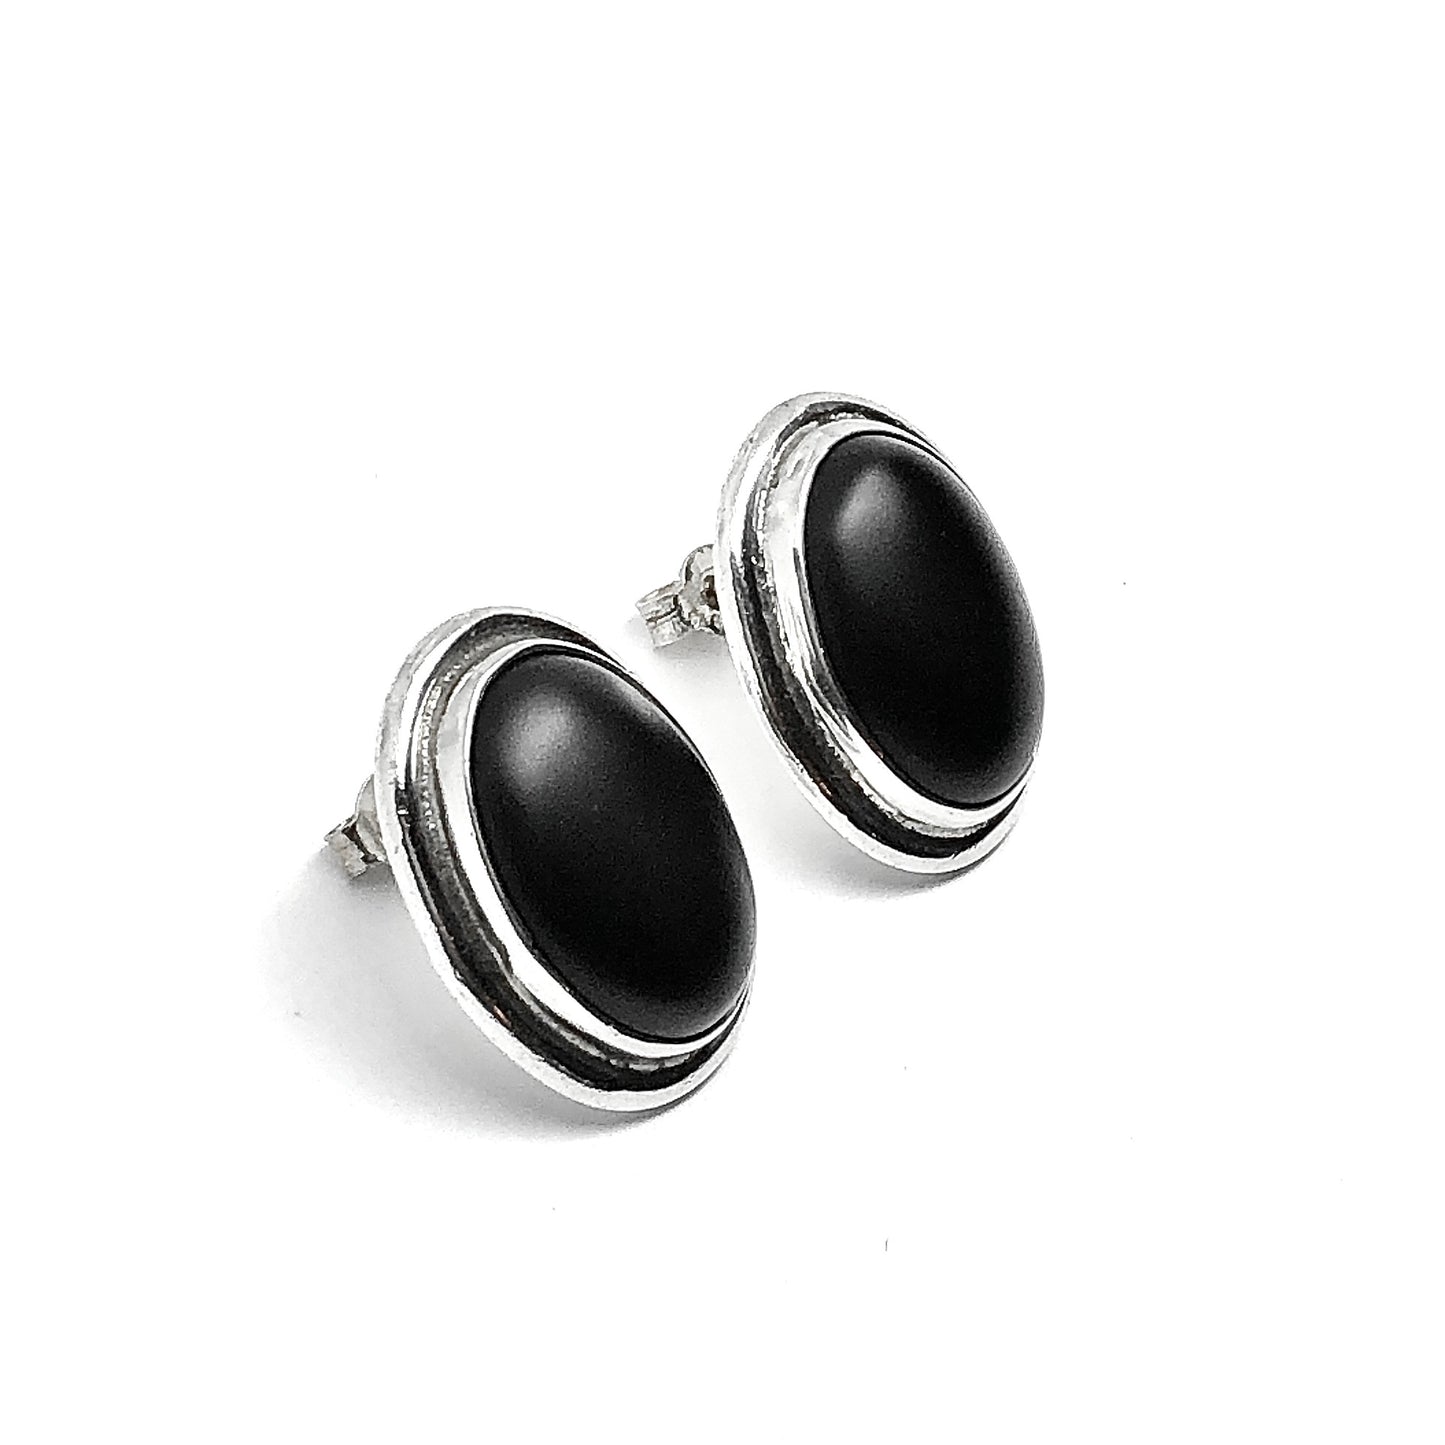 Vintage Sterling Silver Black Stone Oval Earrings - Blingschlingers Jewelry USA